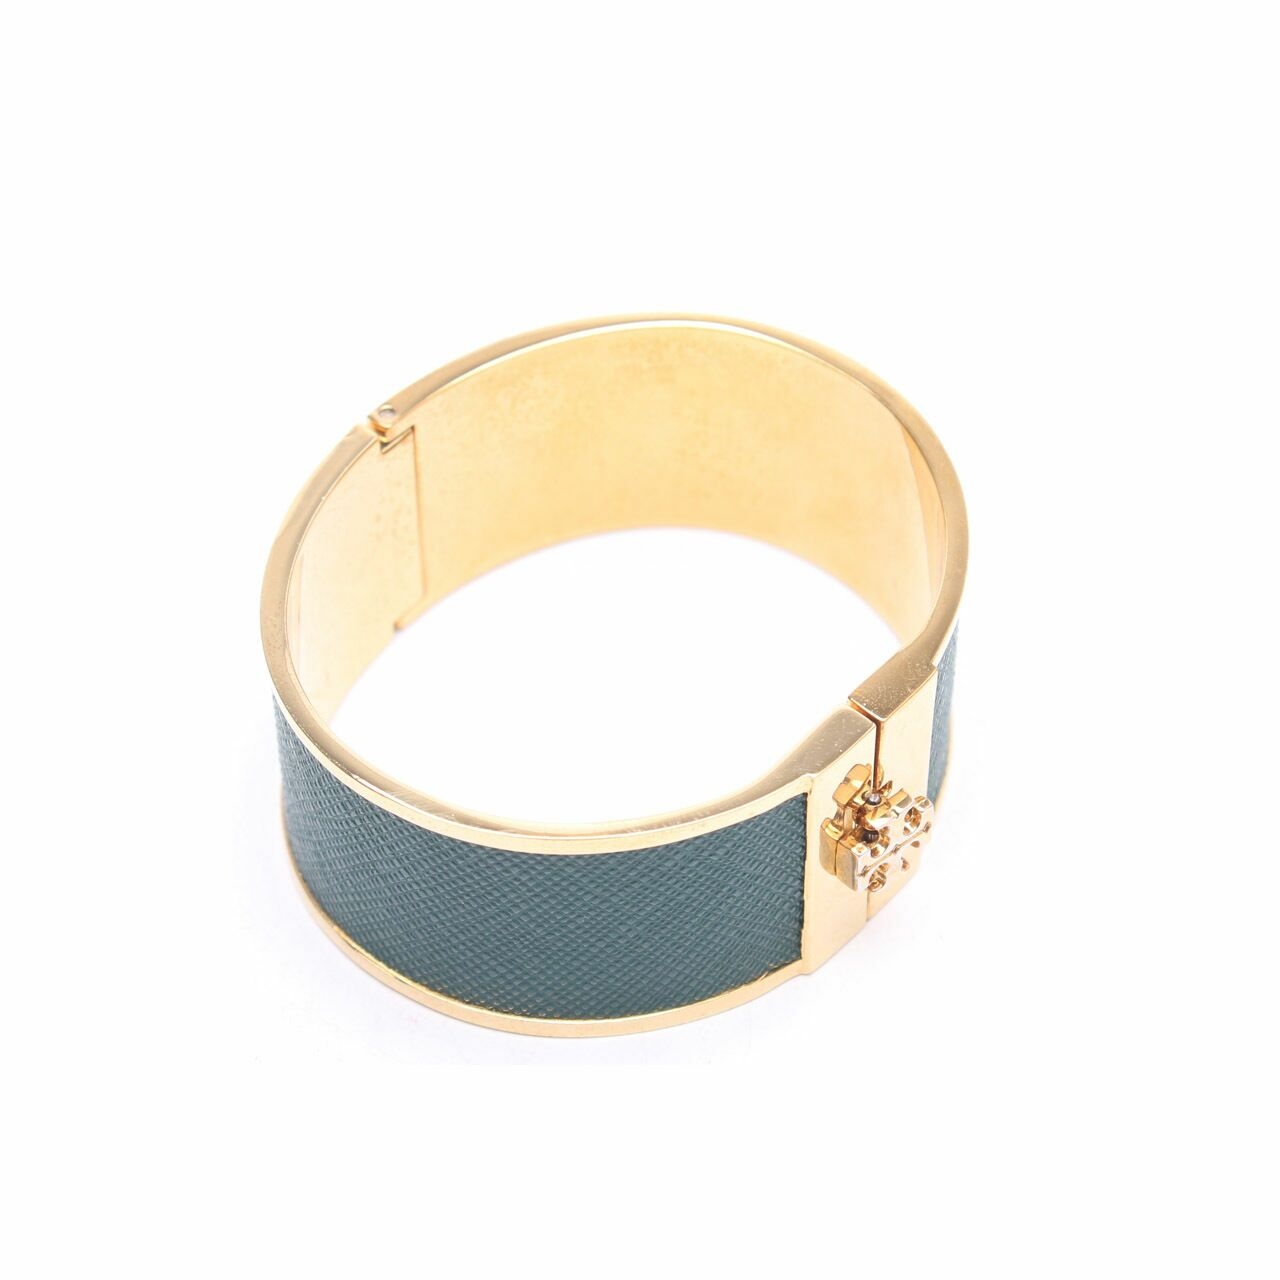 Tory Burch Gold & Green Bracelet Jewelry